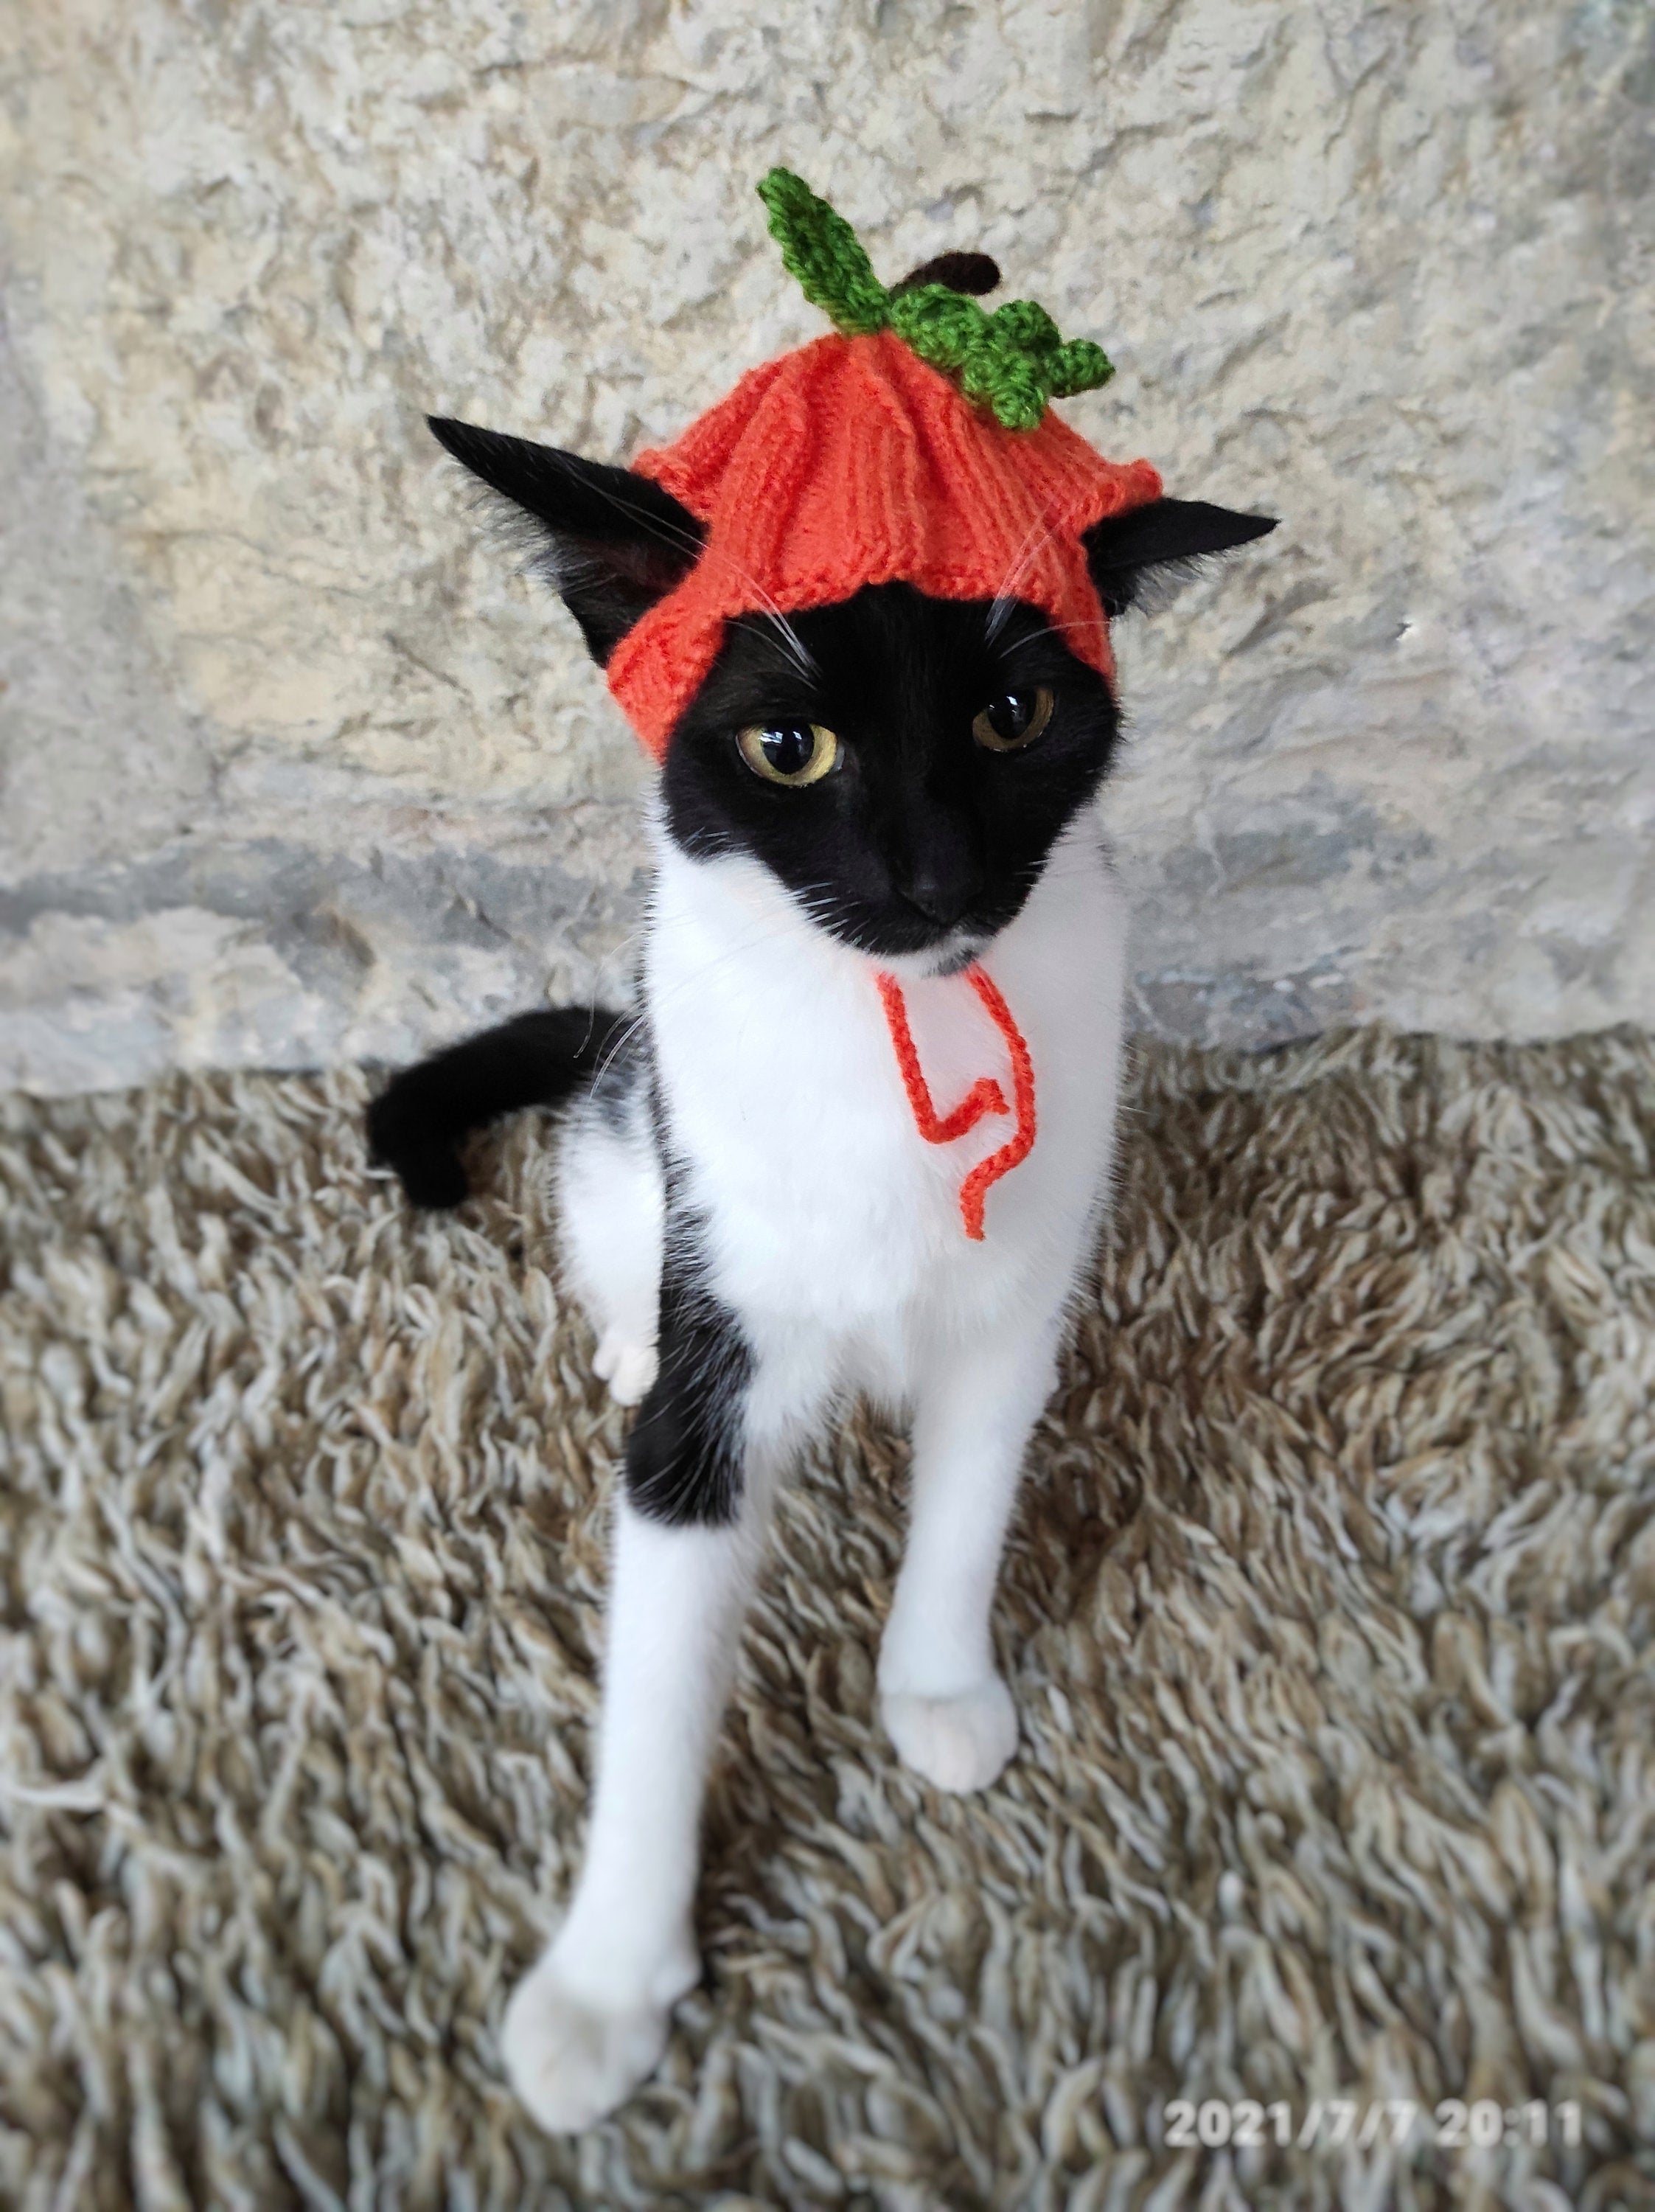 Pumpkin cat hat cat costumes hats for cats cat clothing cat accessories pet supplies pet accessories pet clothings